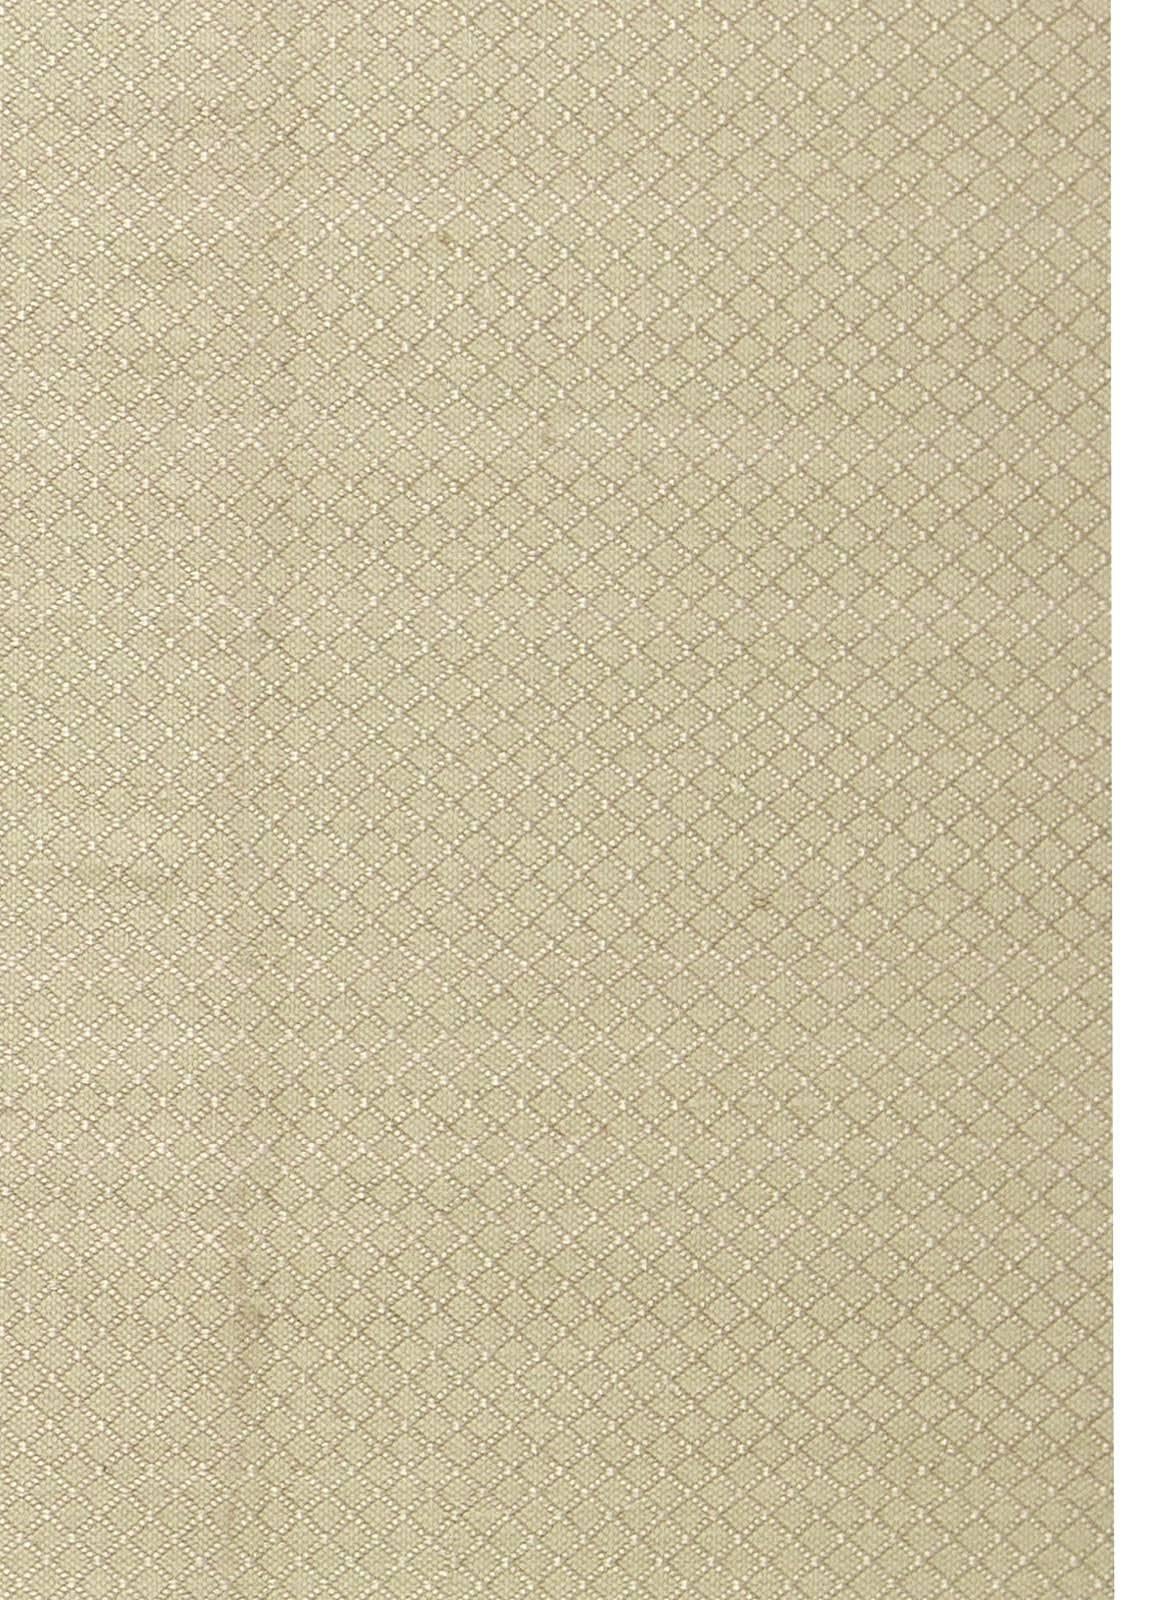 Contemporary Modern Geometric Beige Flat Weave Viscose Rug by Doris Leslie Blau For Sale